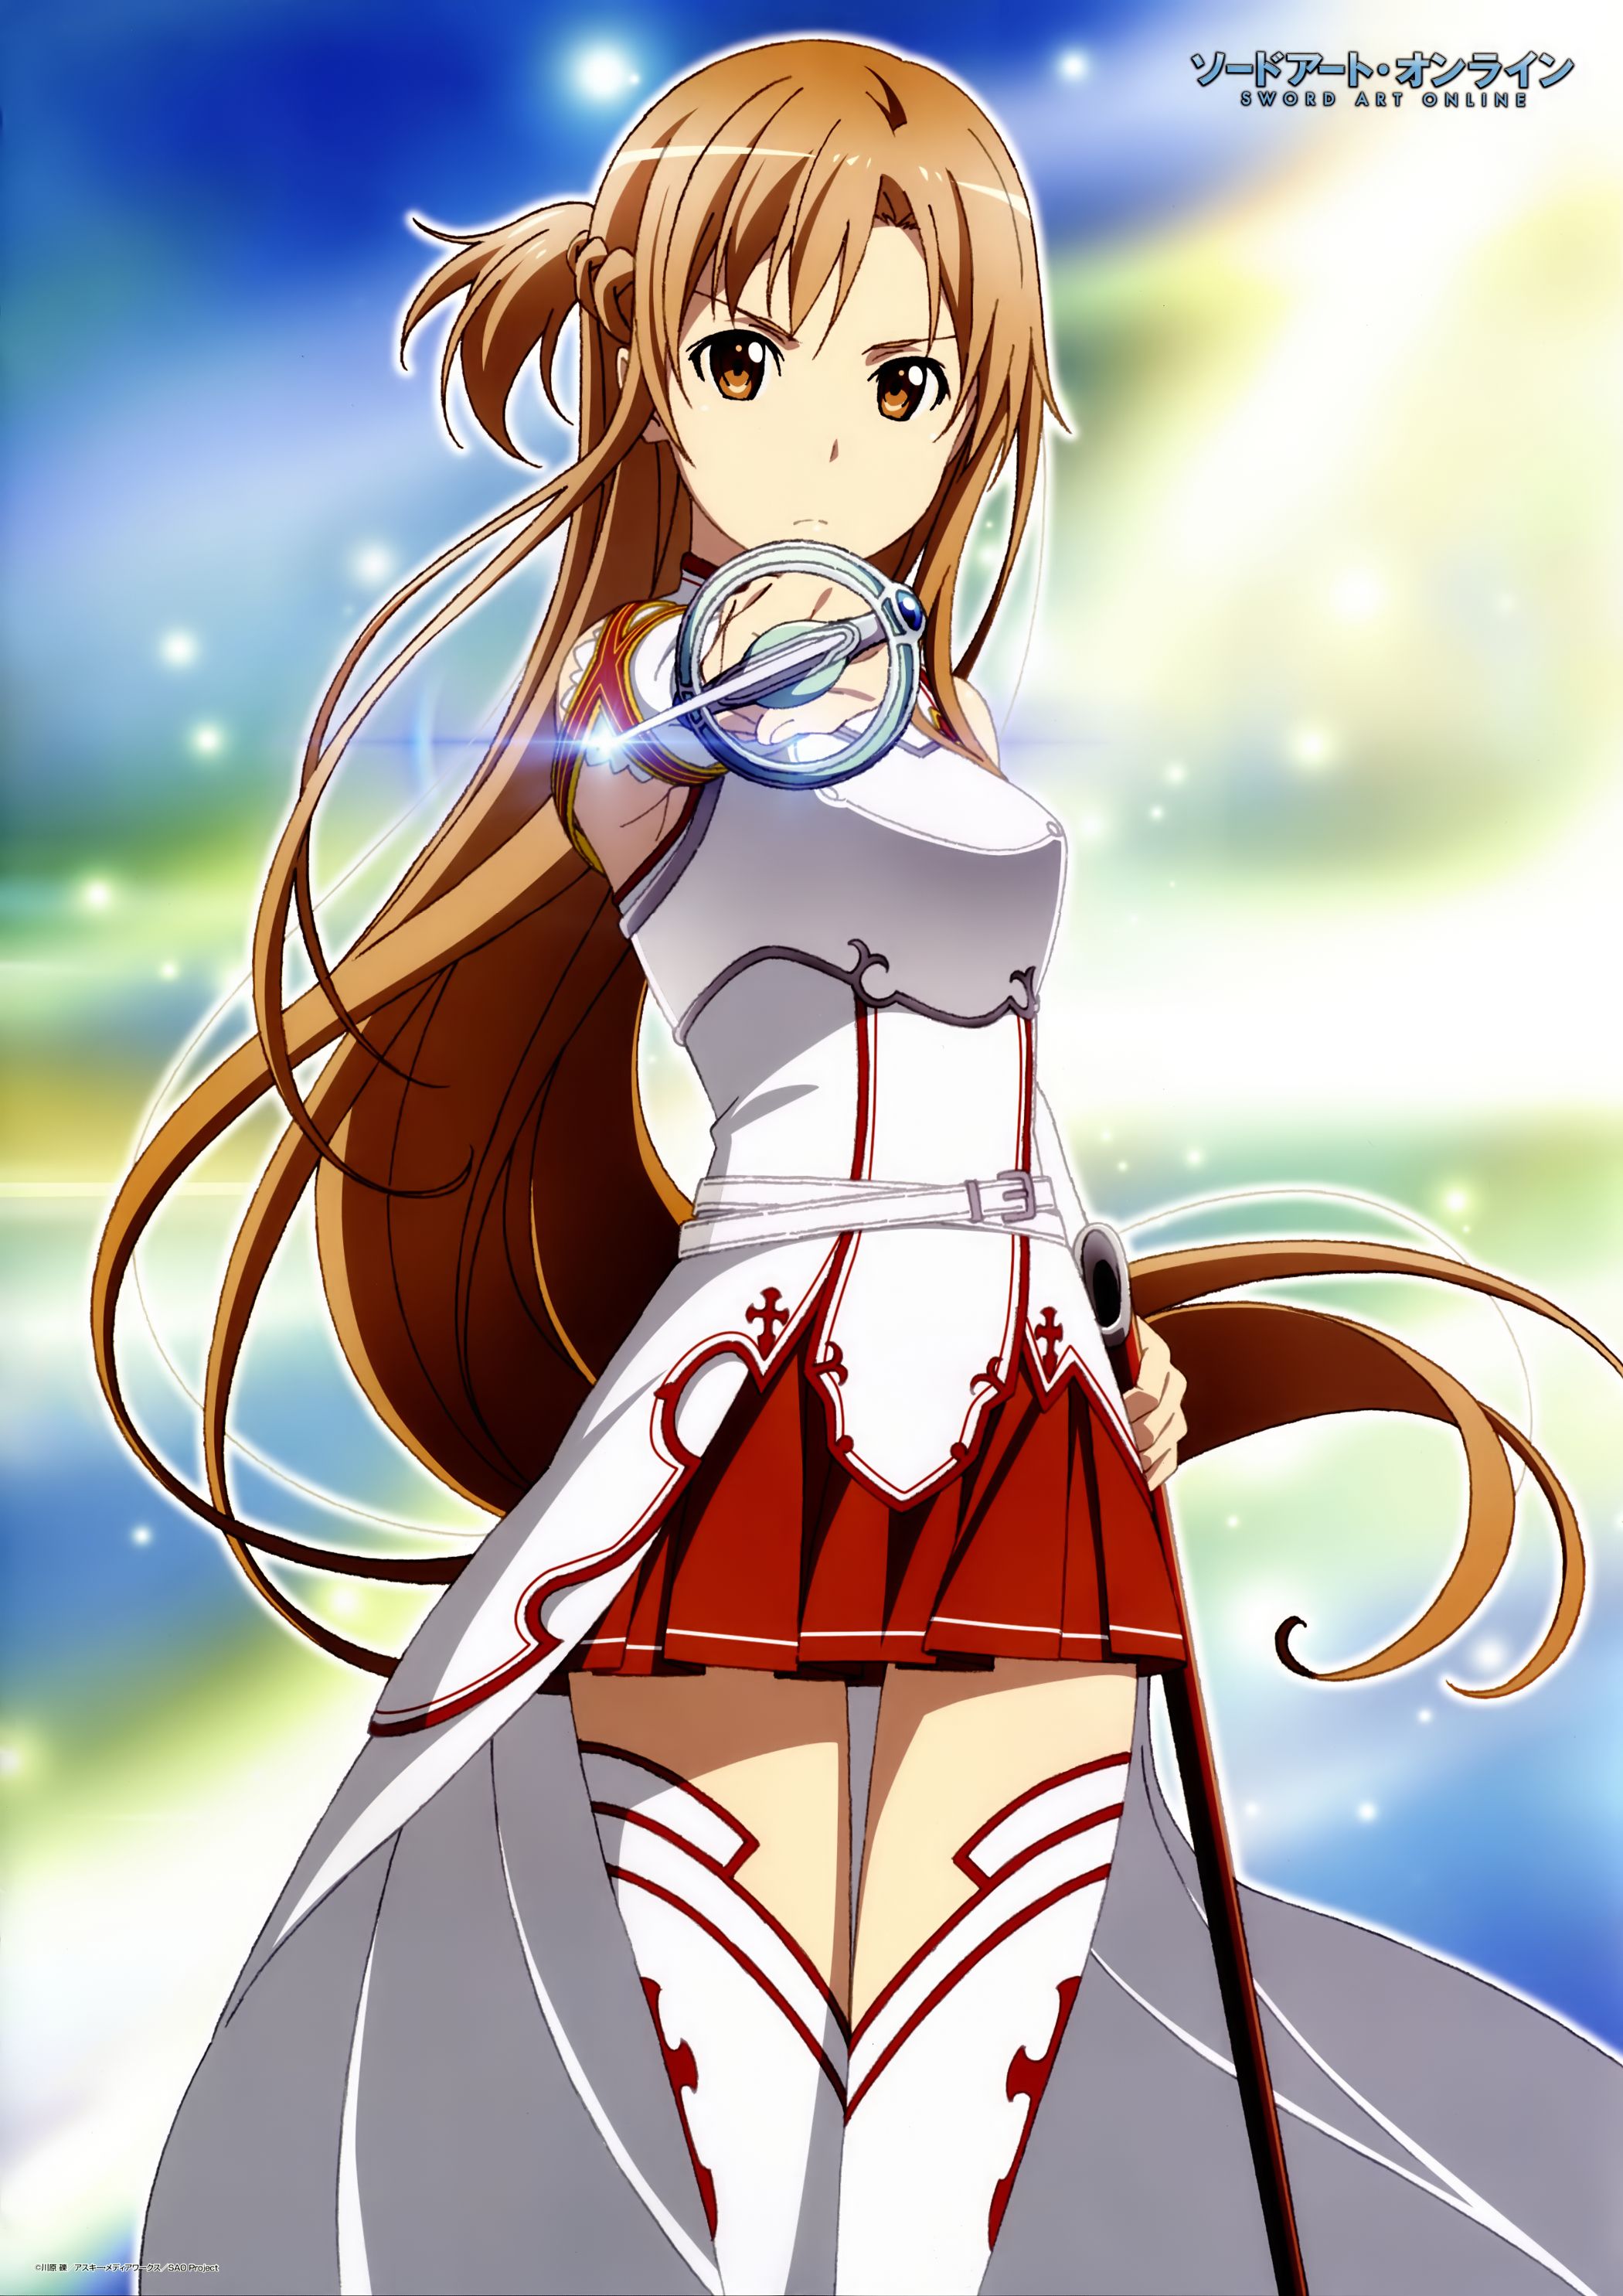 Yuuki Asuna Art Online Anime Image Board